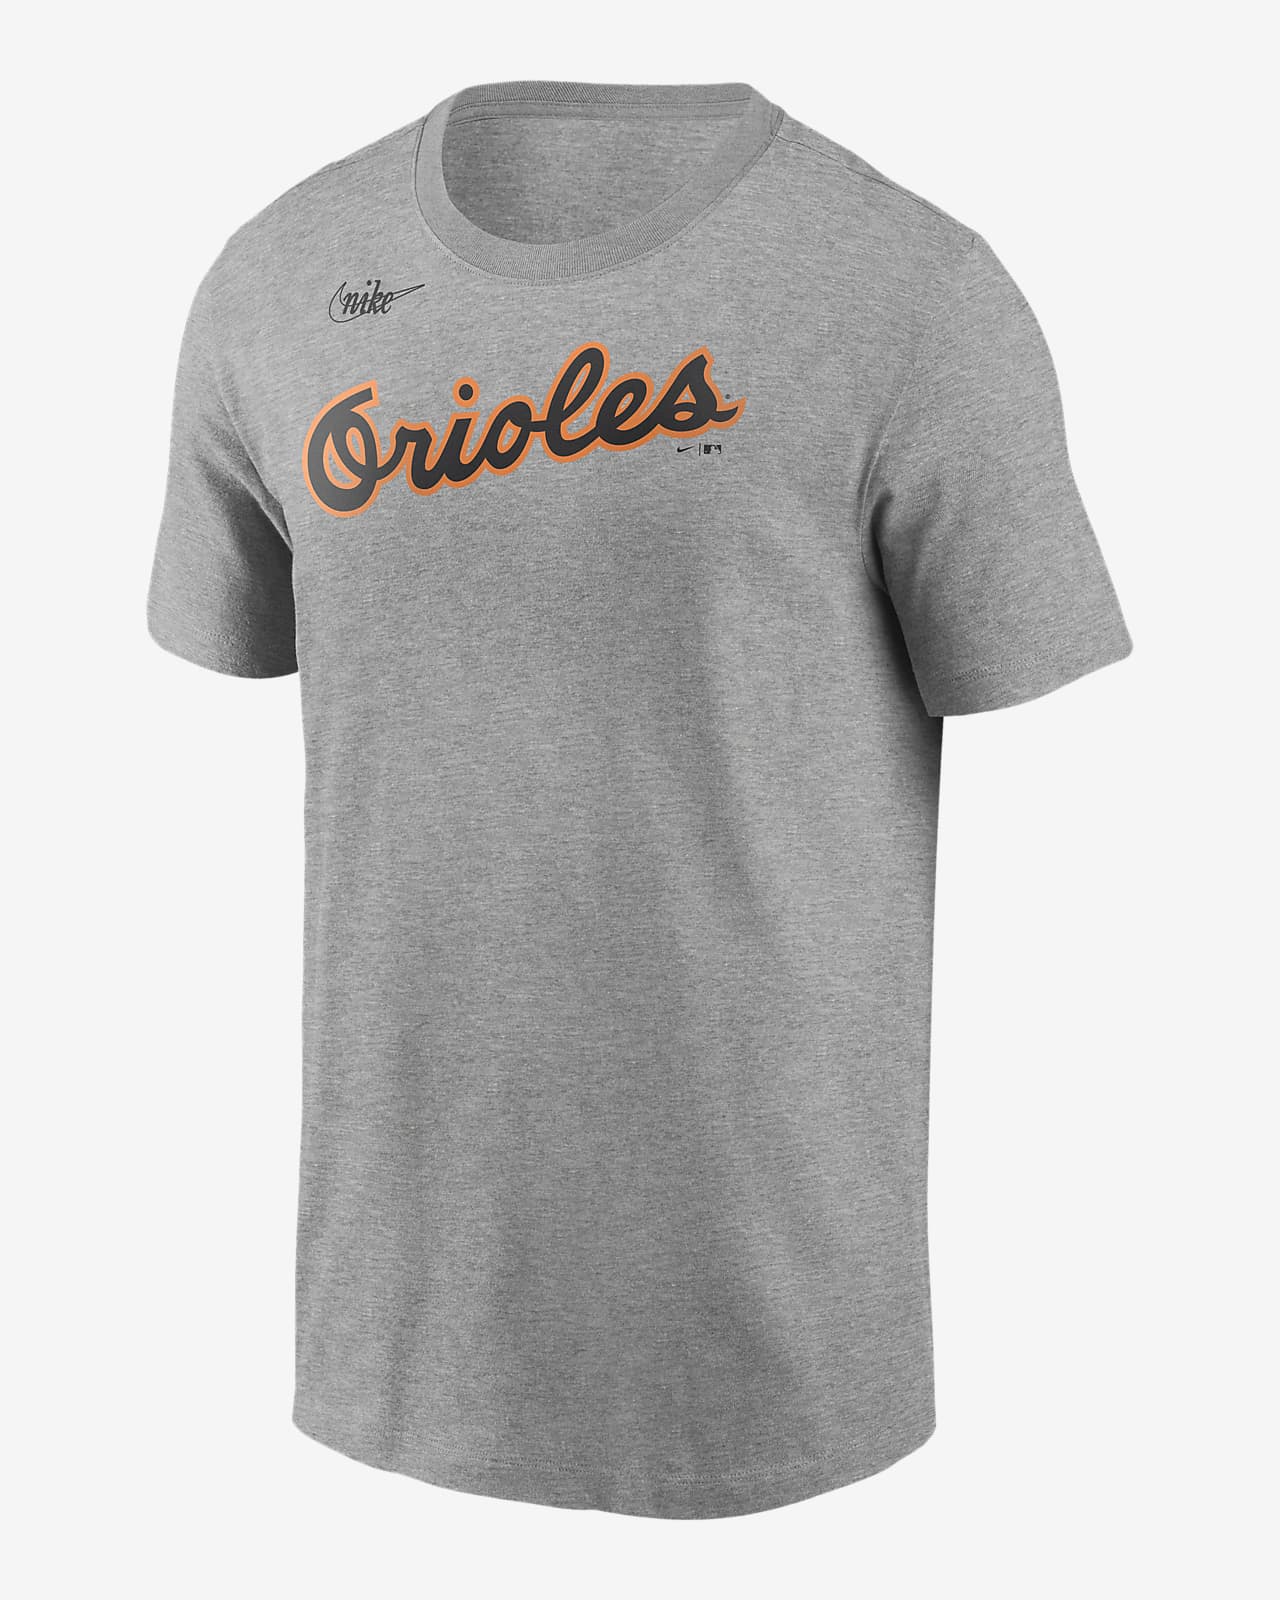 Nike Cooperstown Wordmark (MLB Baltimore Orioles) Men's T-Shirt